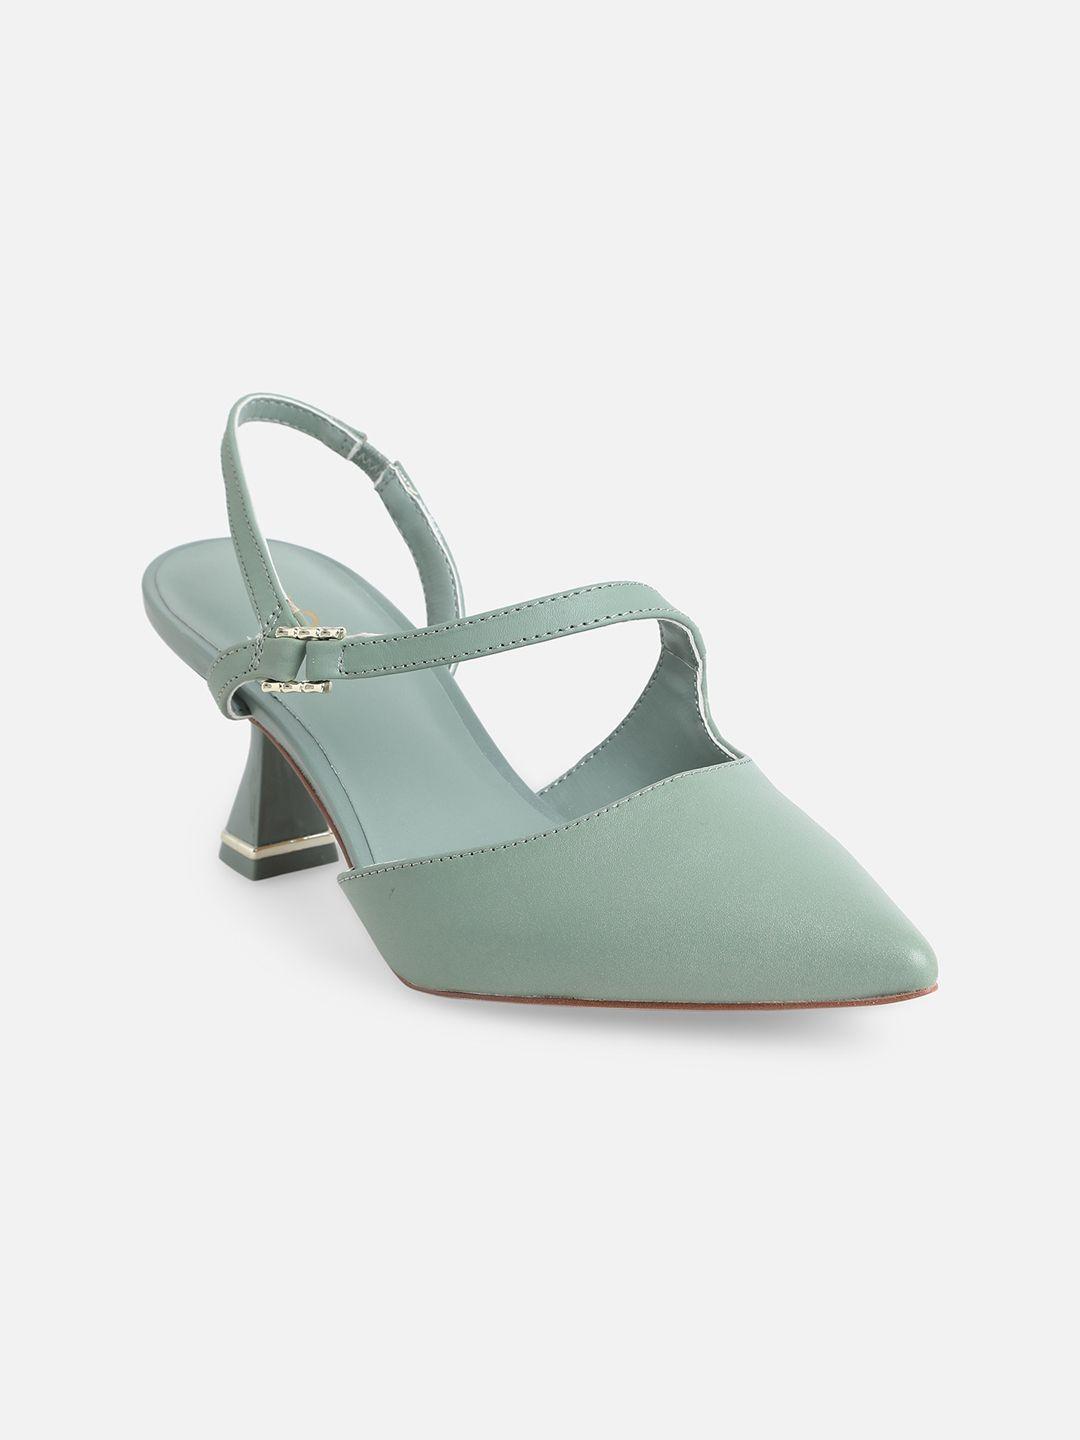 aldo-green-kitten-heels